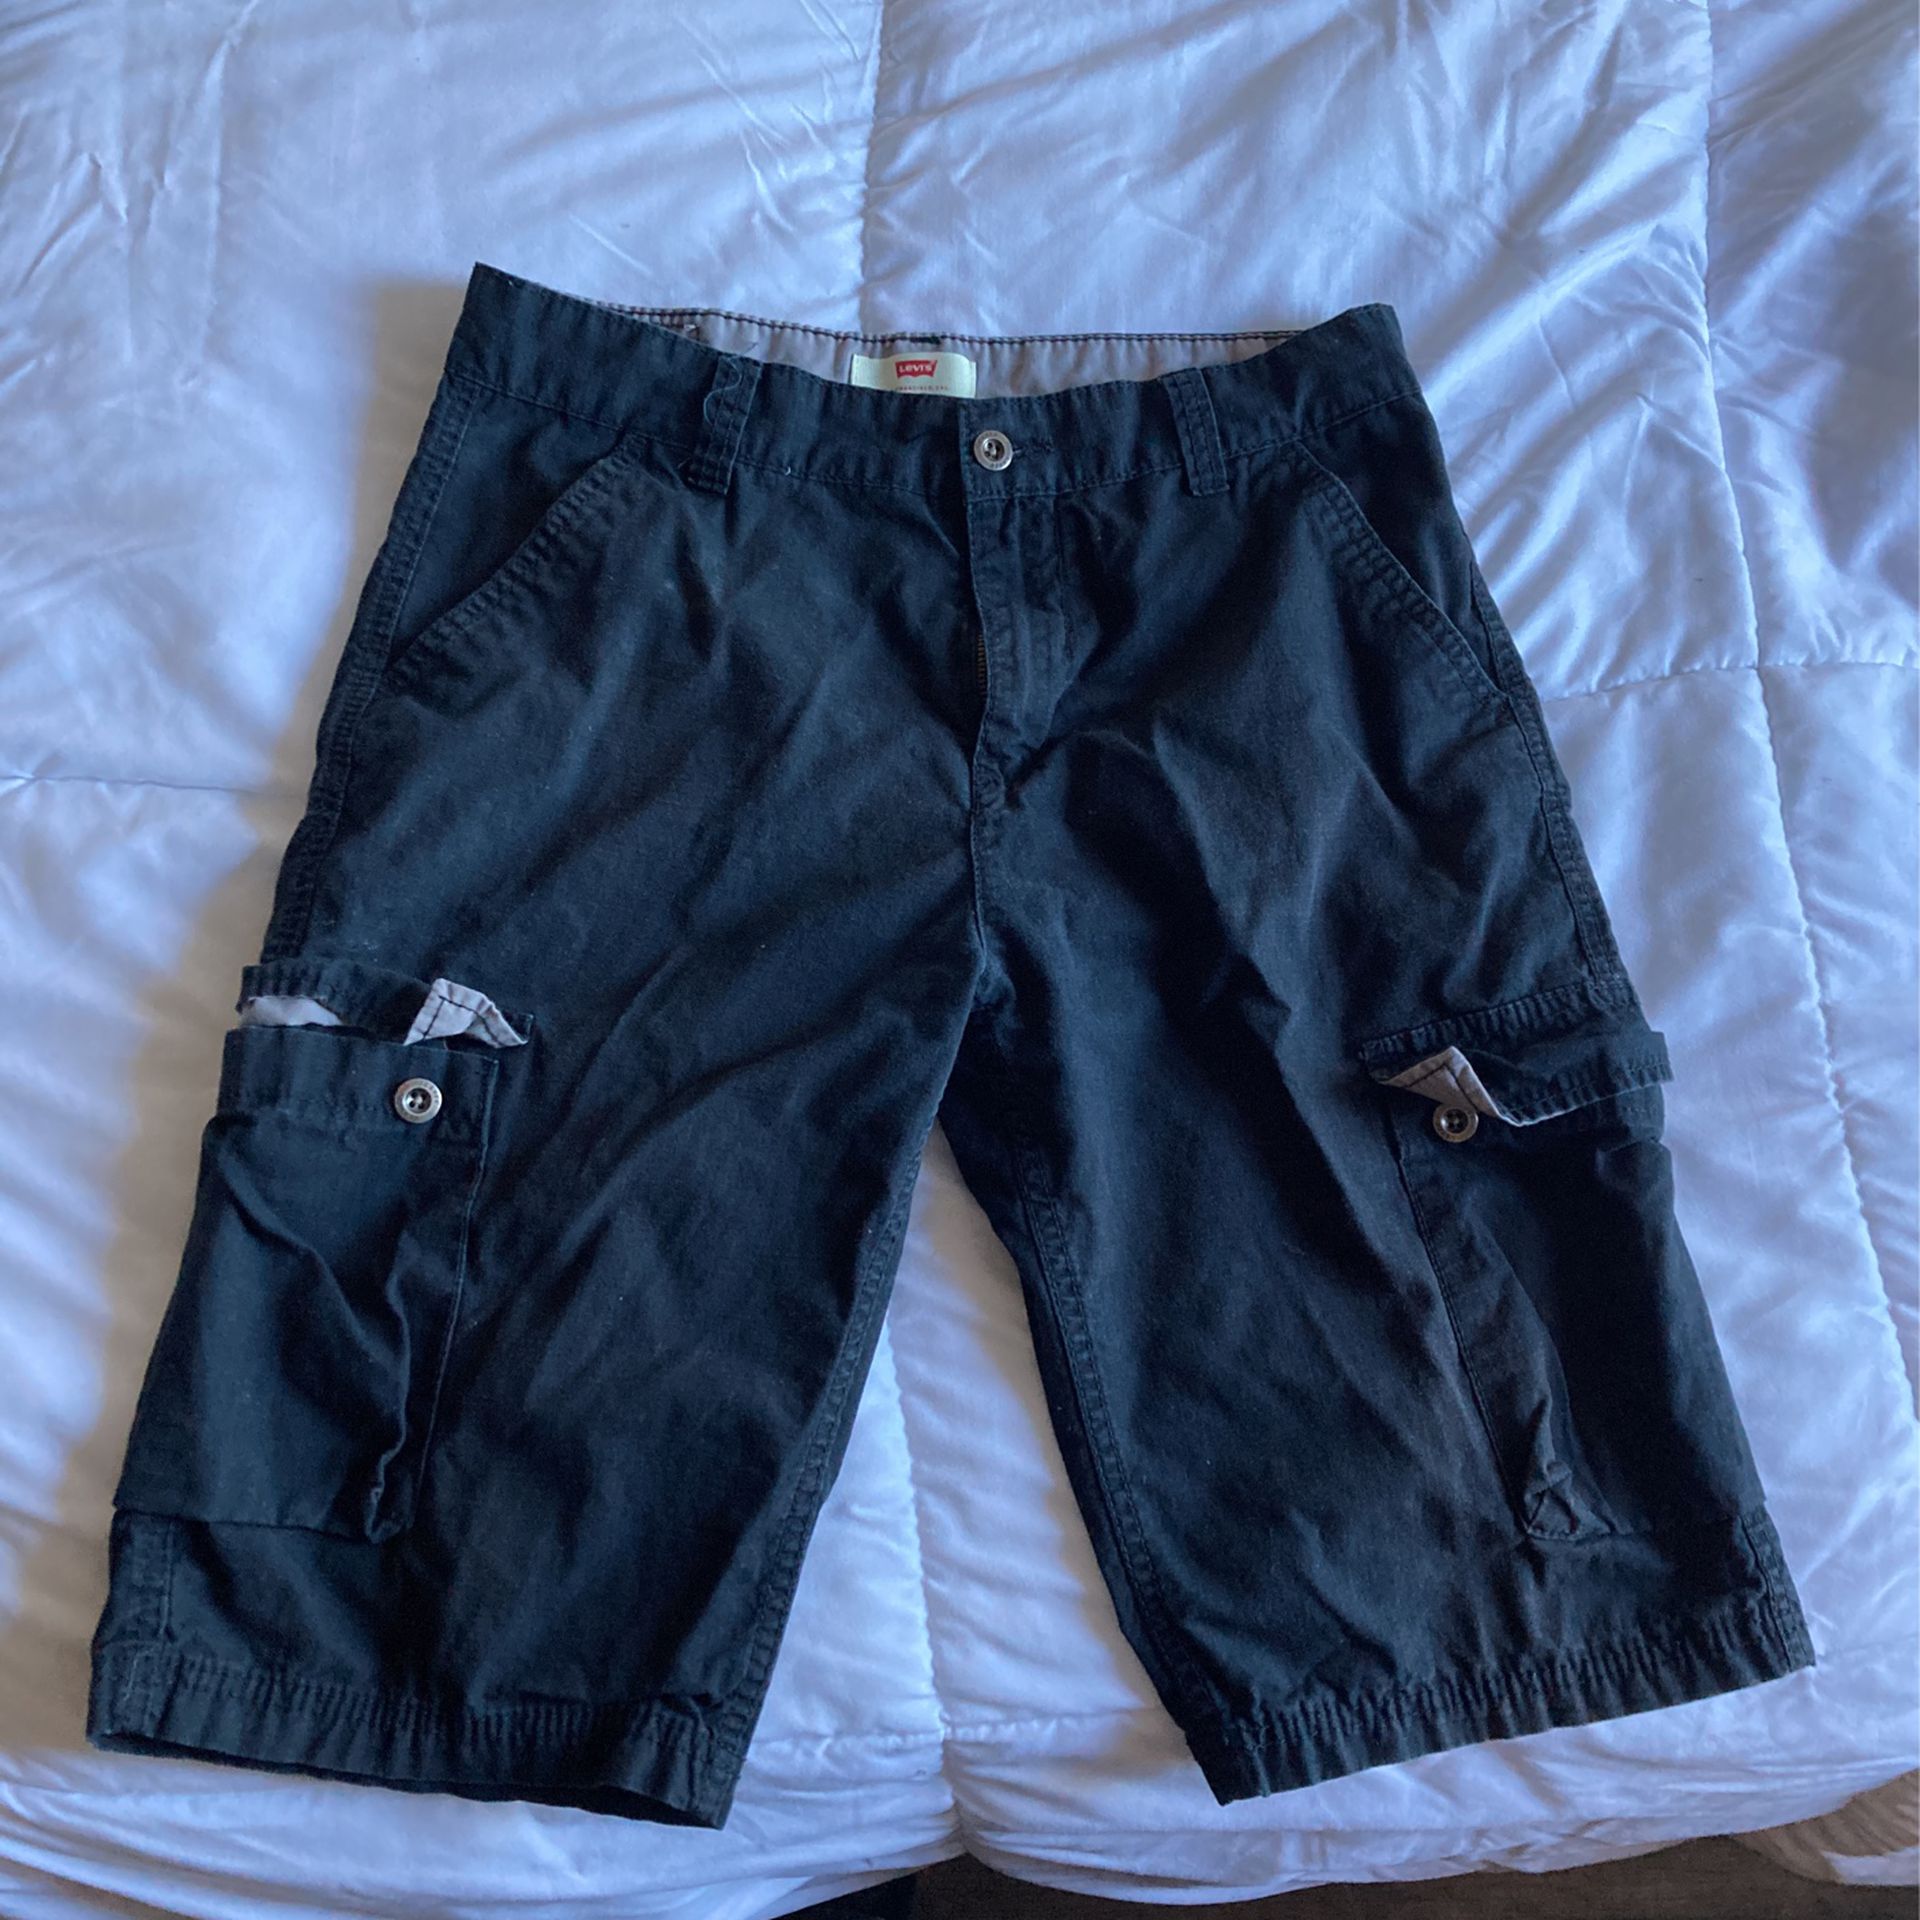 Black Levi Cargo Shorts 29 Waist